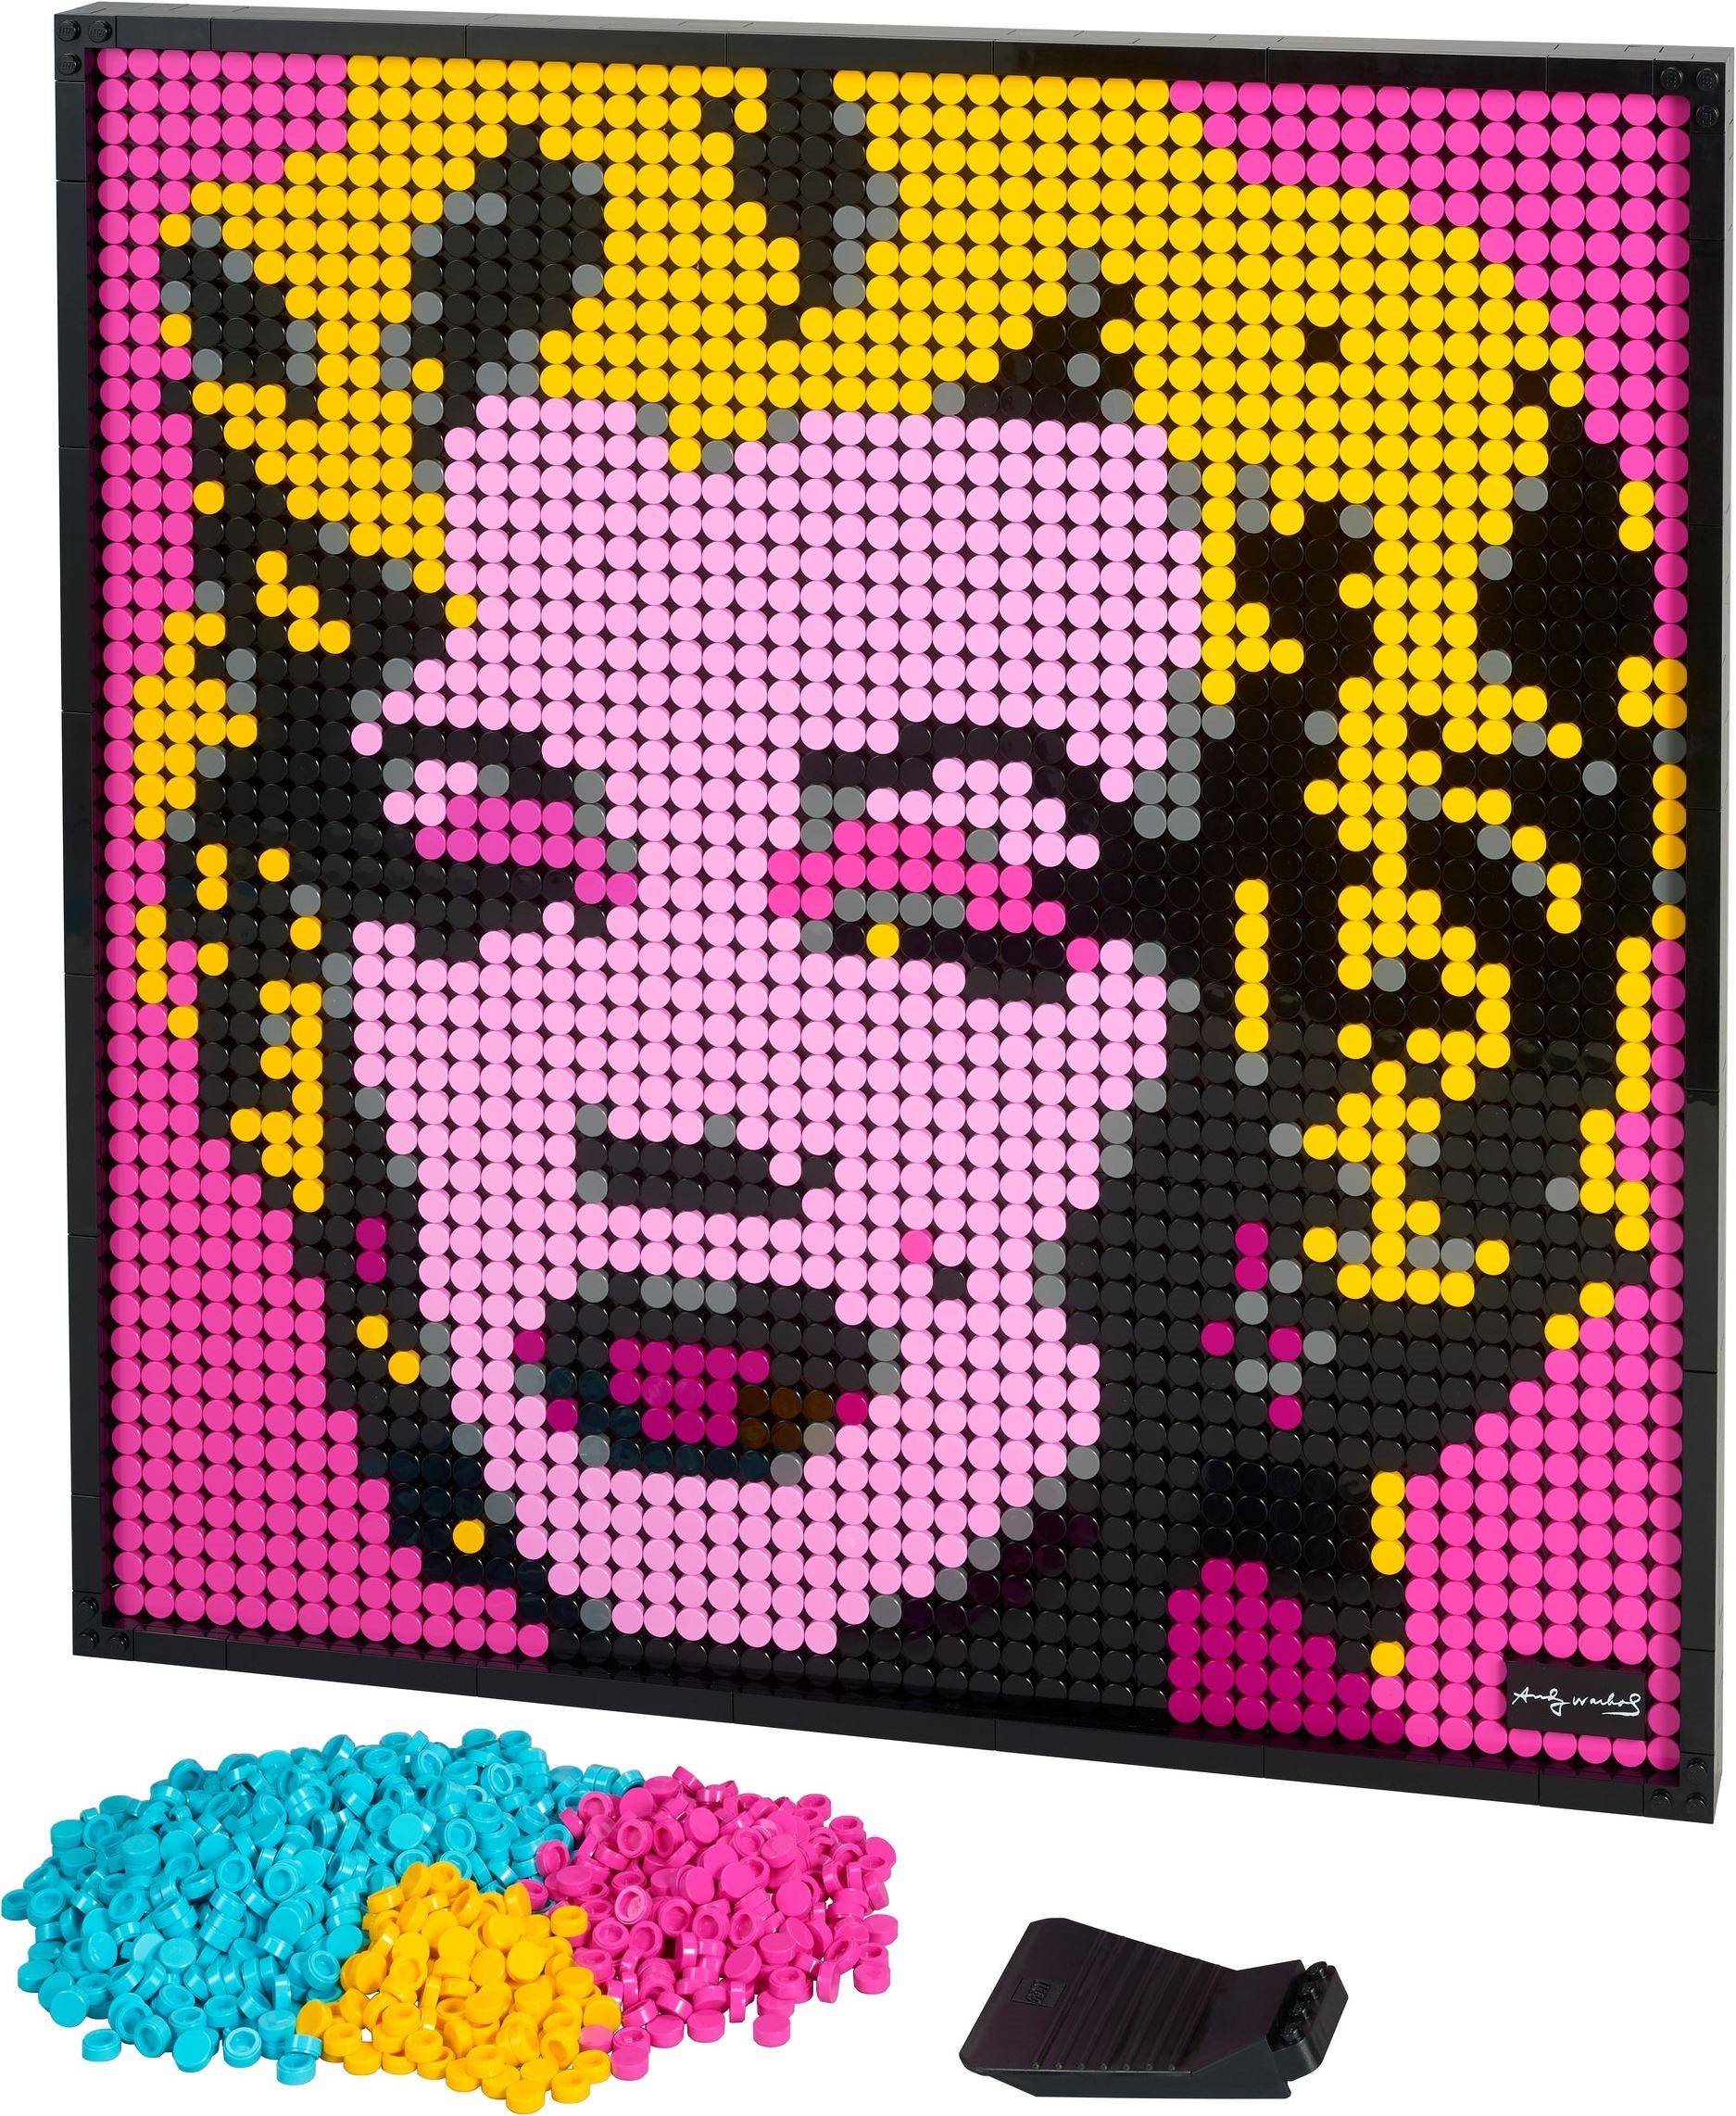 LEGO Art 31197 Andy Warhol's Marilyn Monroe set BRAND NEW & Sealed